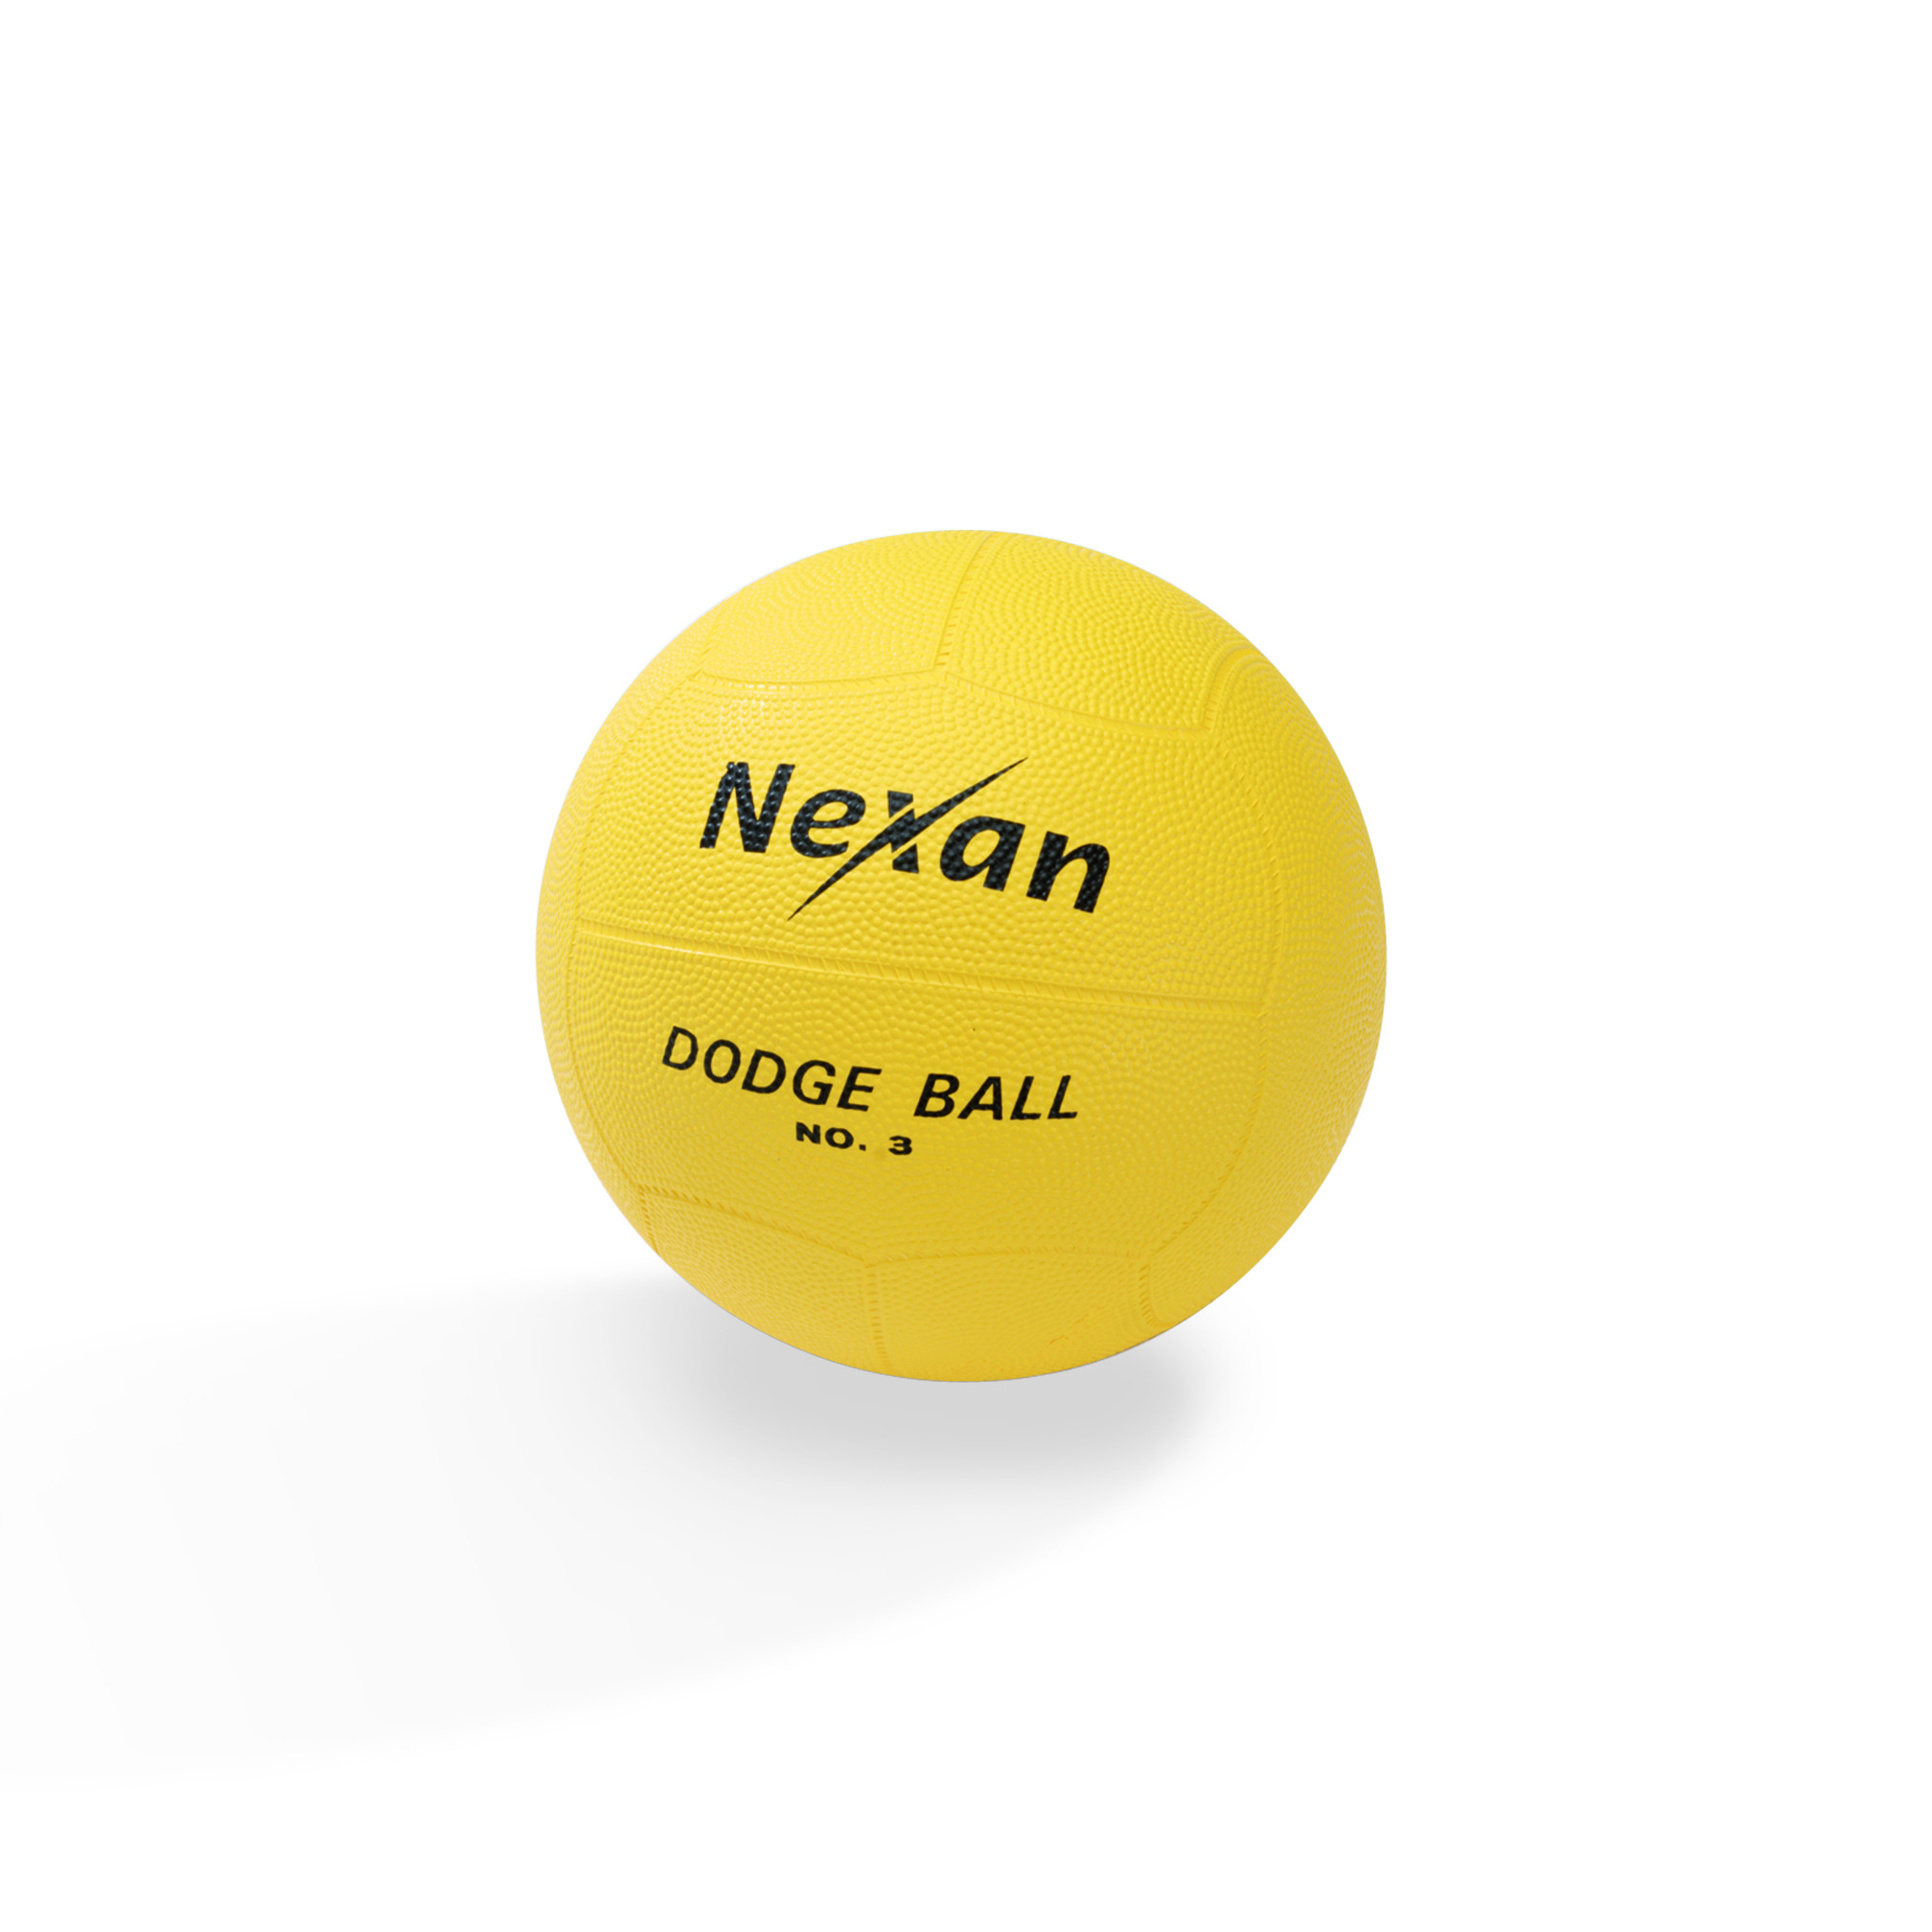 Nexan dodge ball, yellow